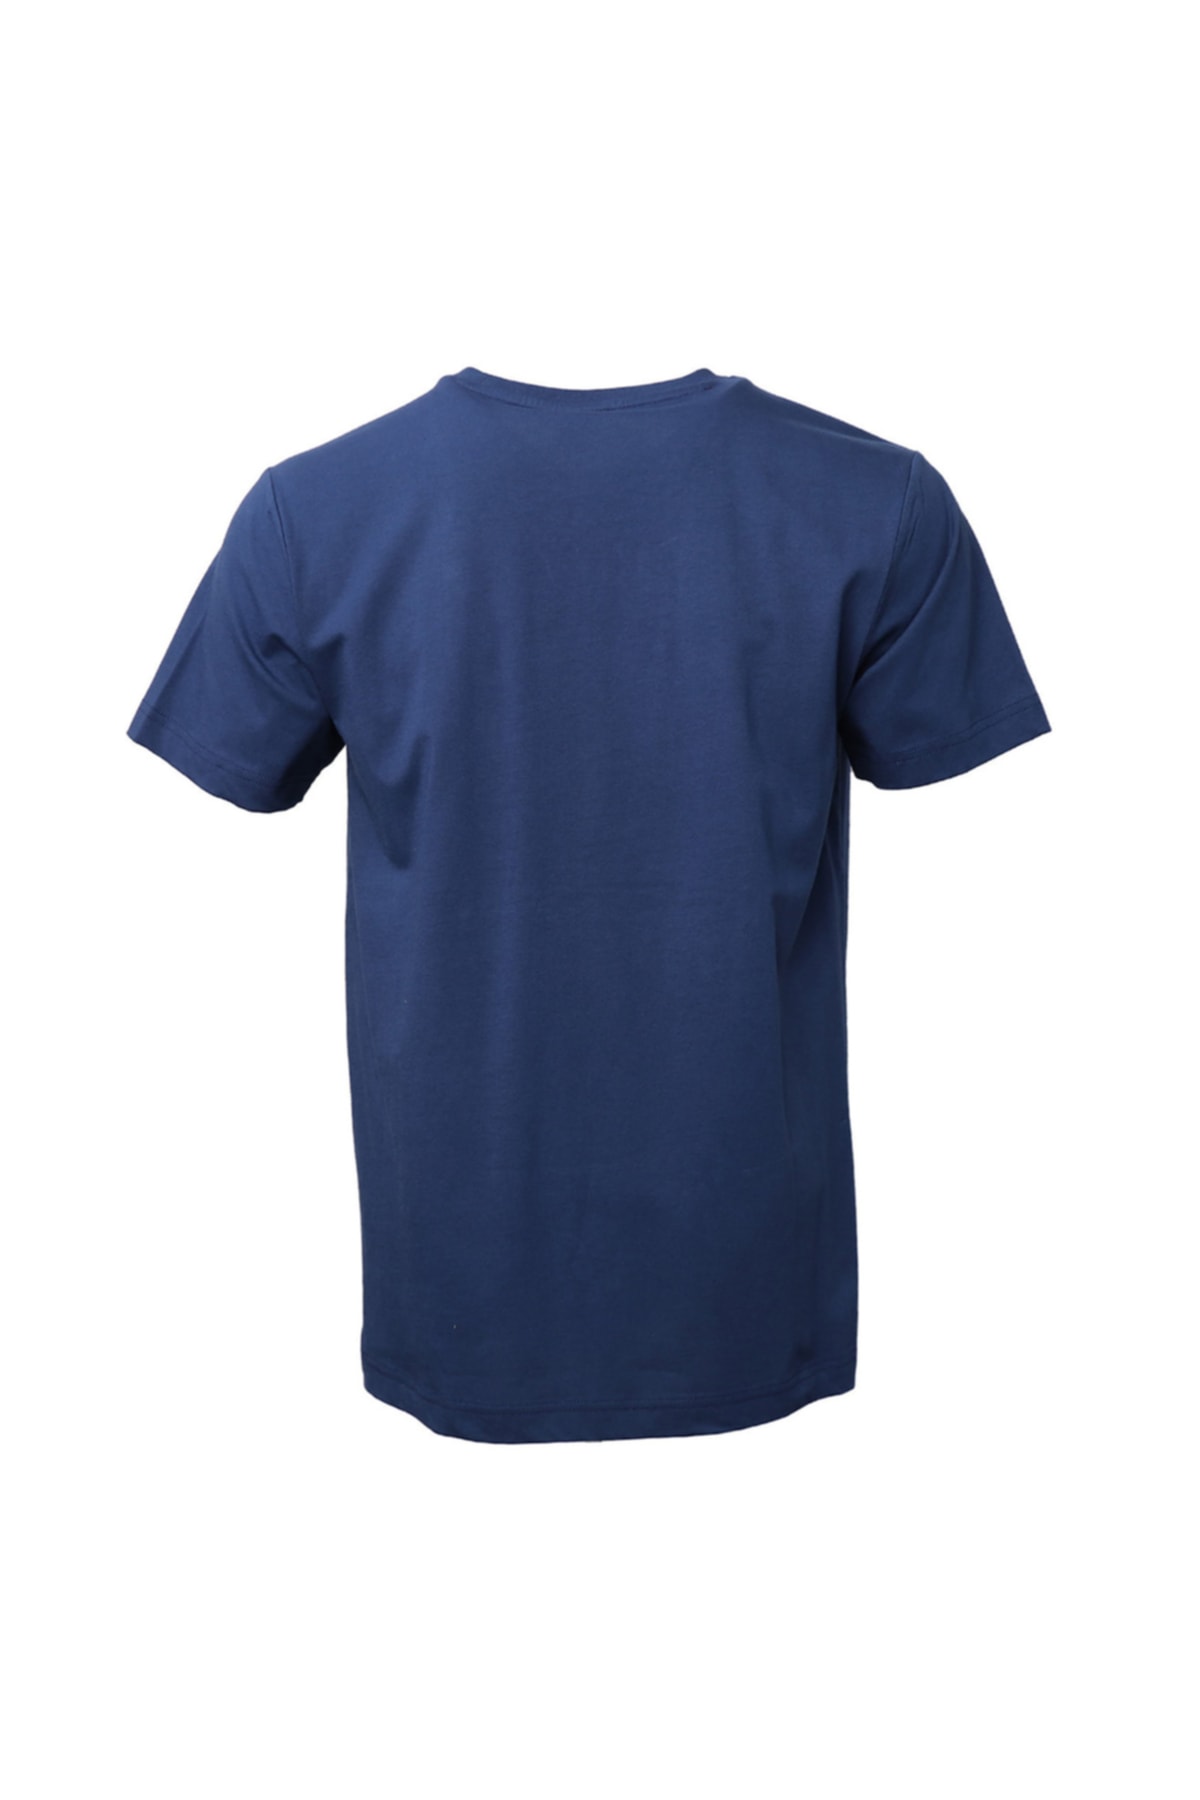 HUMMEL تیشرت مردانه سرمه ای Hmlpointtal T-shirt S/s